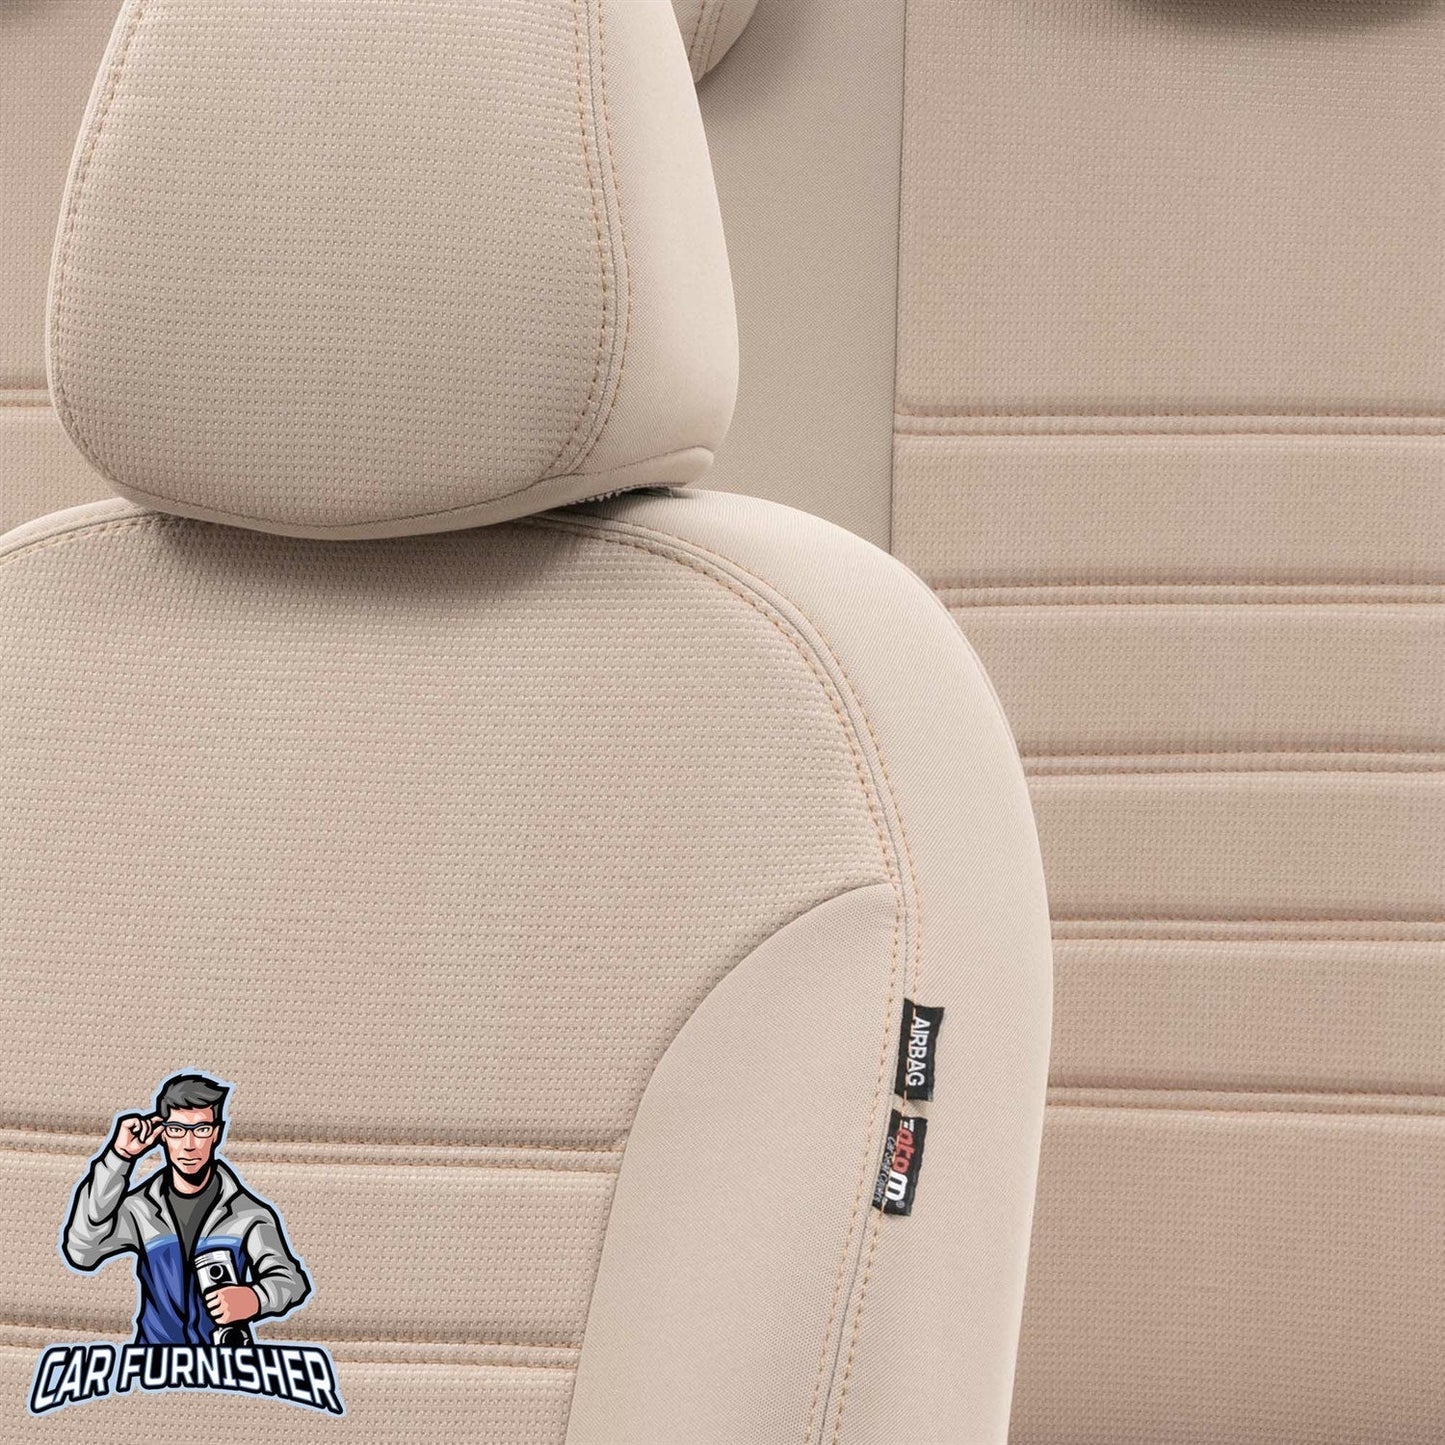 Volvo S90 Seat Cover Original Jacquard Design Beige Jacquard Fabric